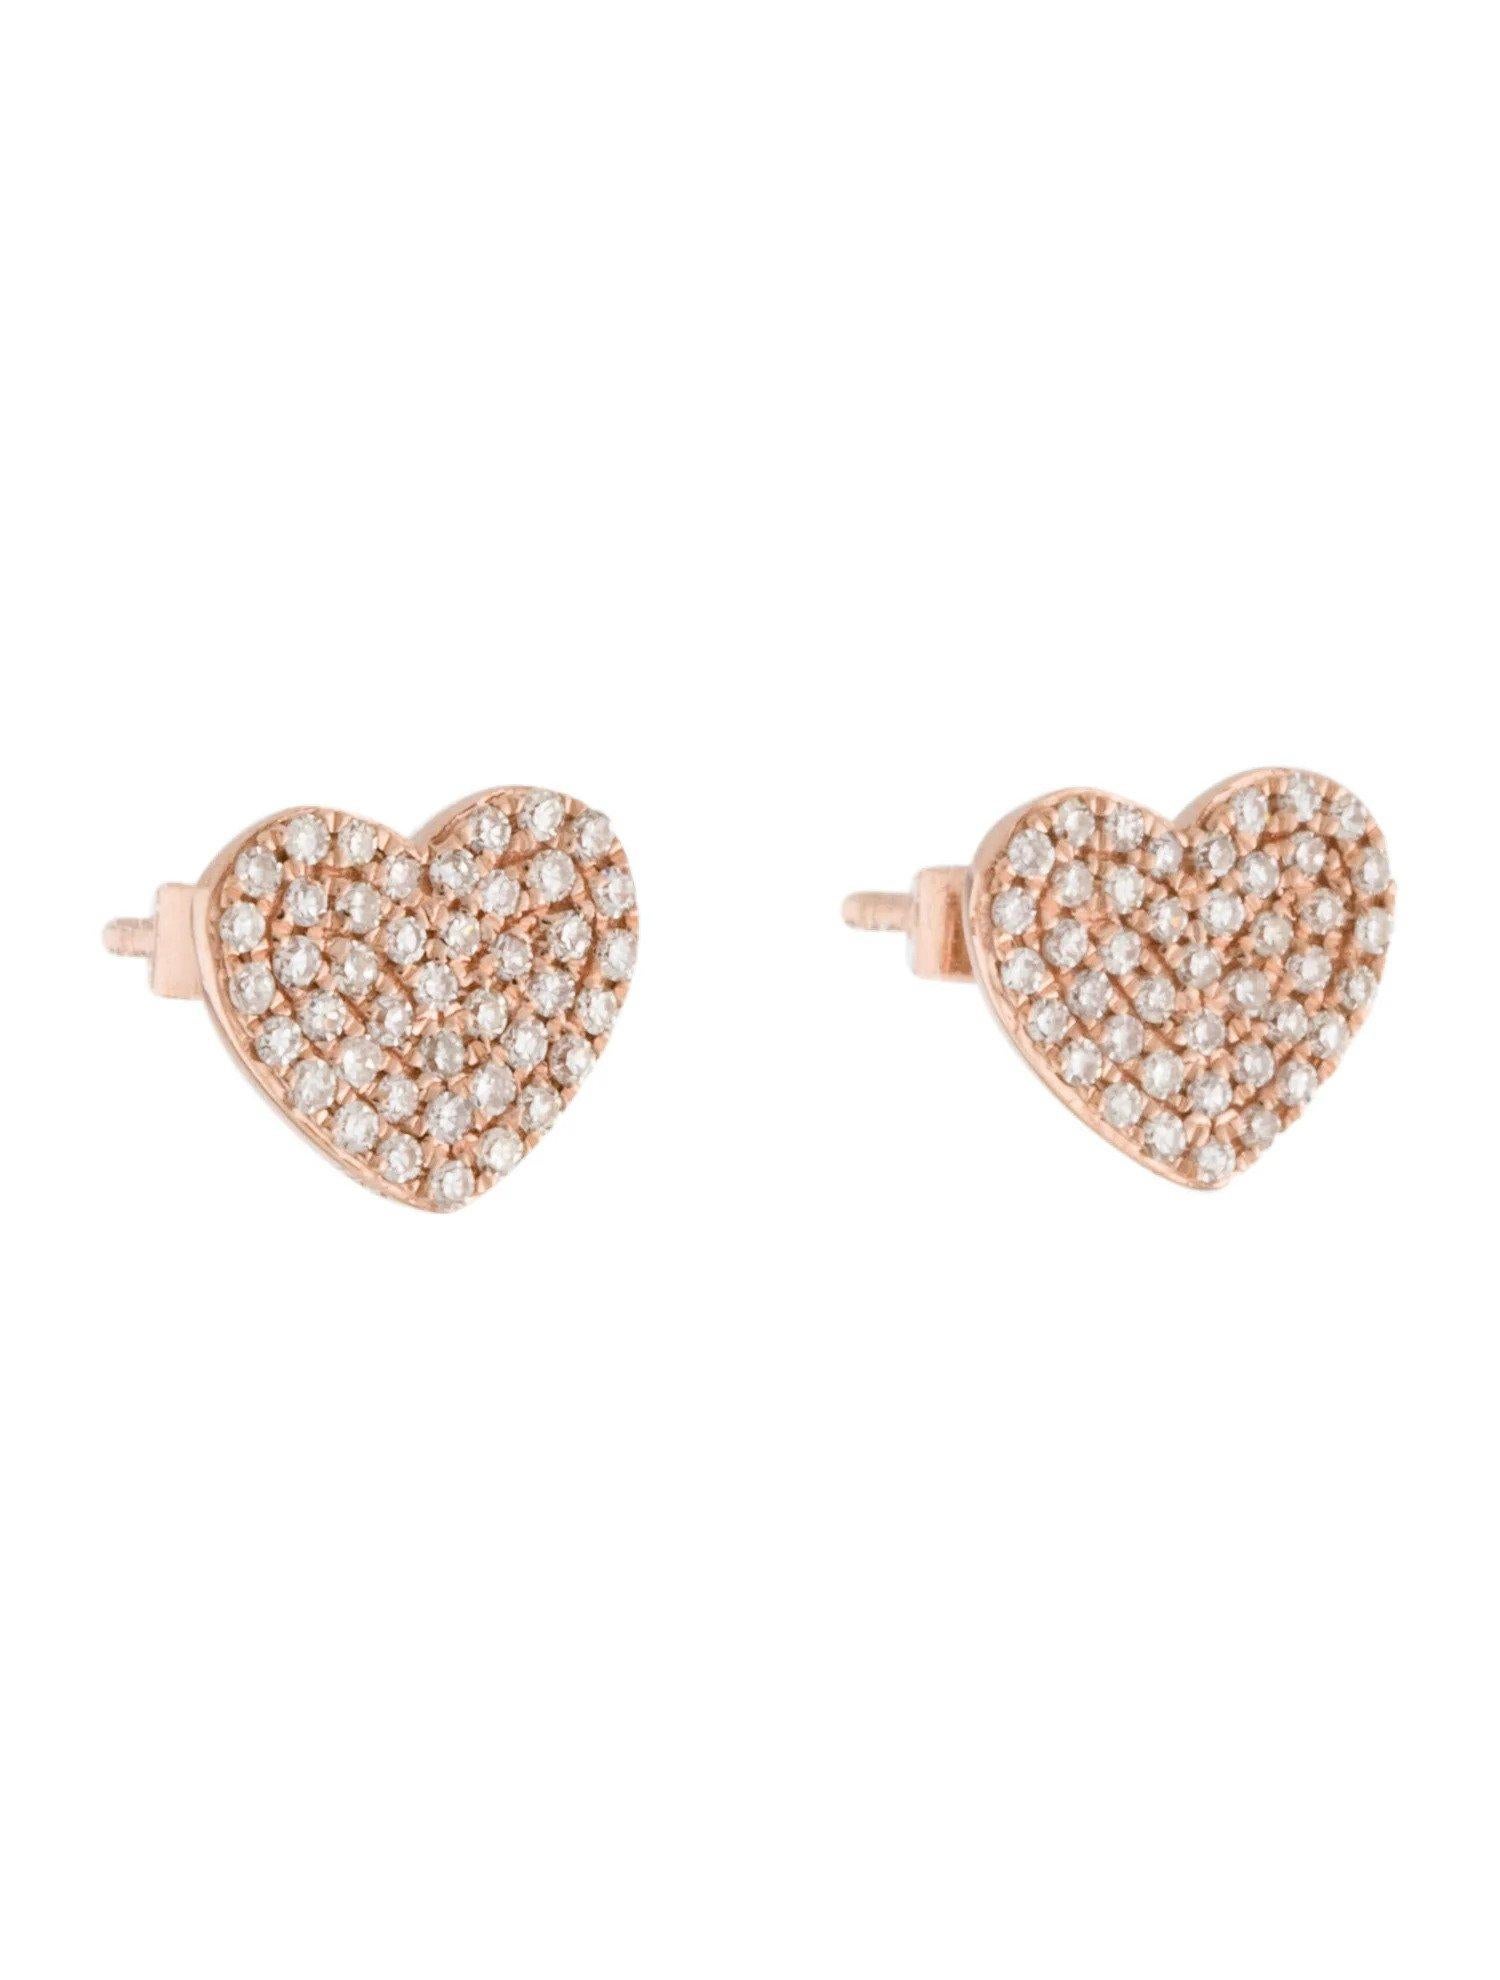 Round Cut 0.25 Carat Diamond Heart Rose Gold Stud Earrings  For Sale